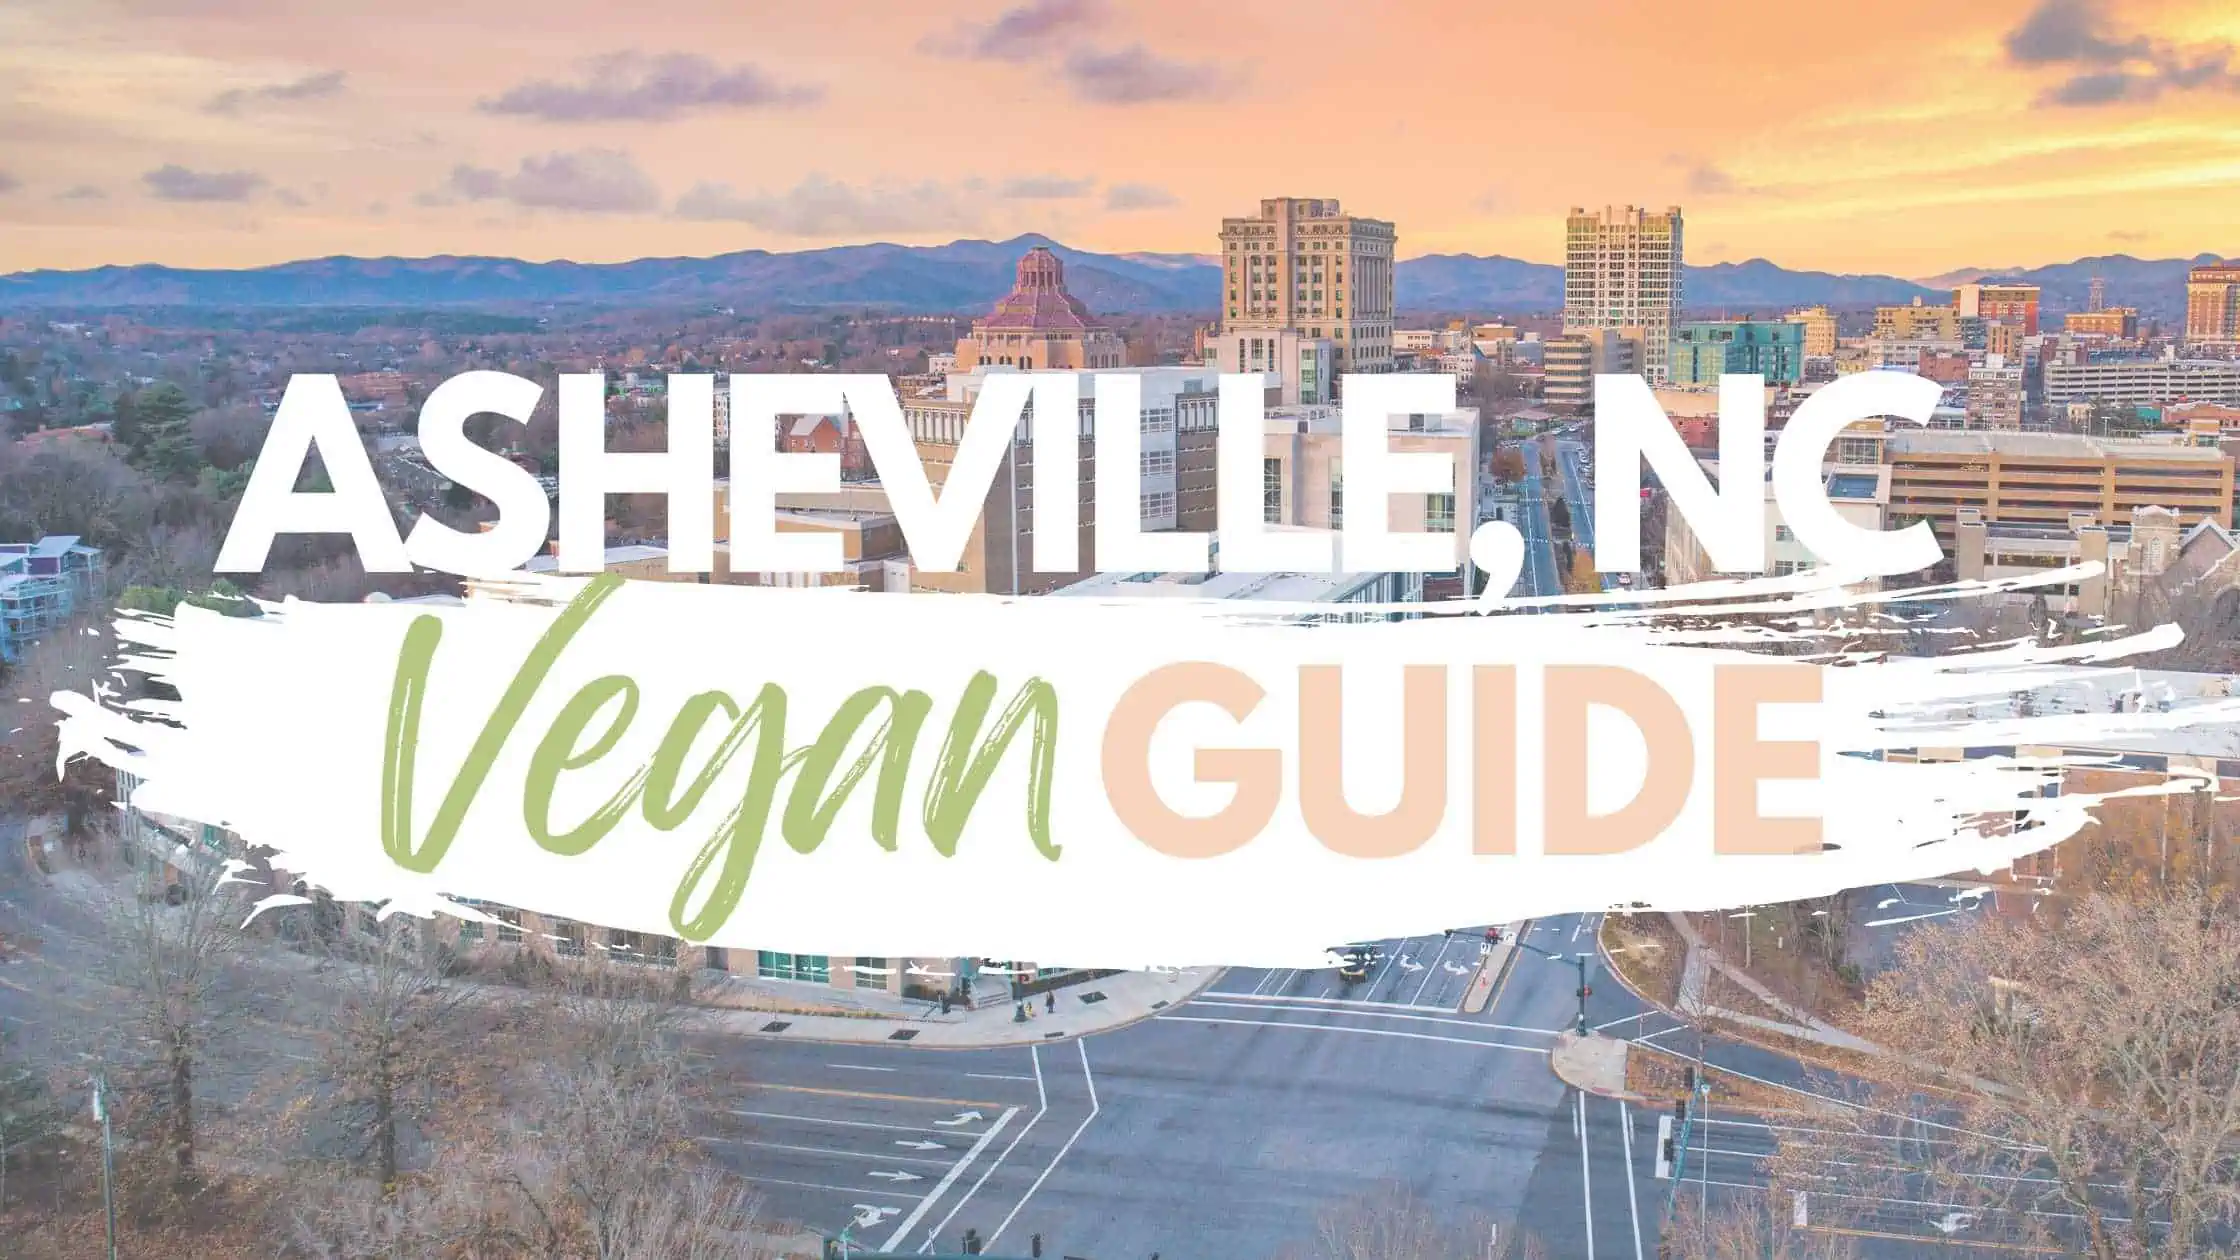 Asheville, NC vegetarian and vegan restaurants guide graphic.